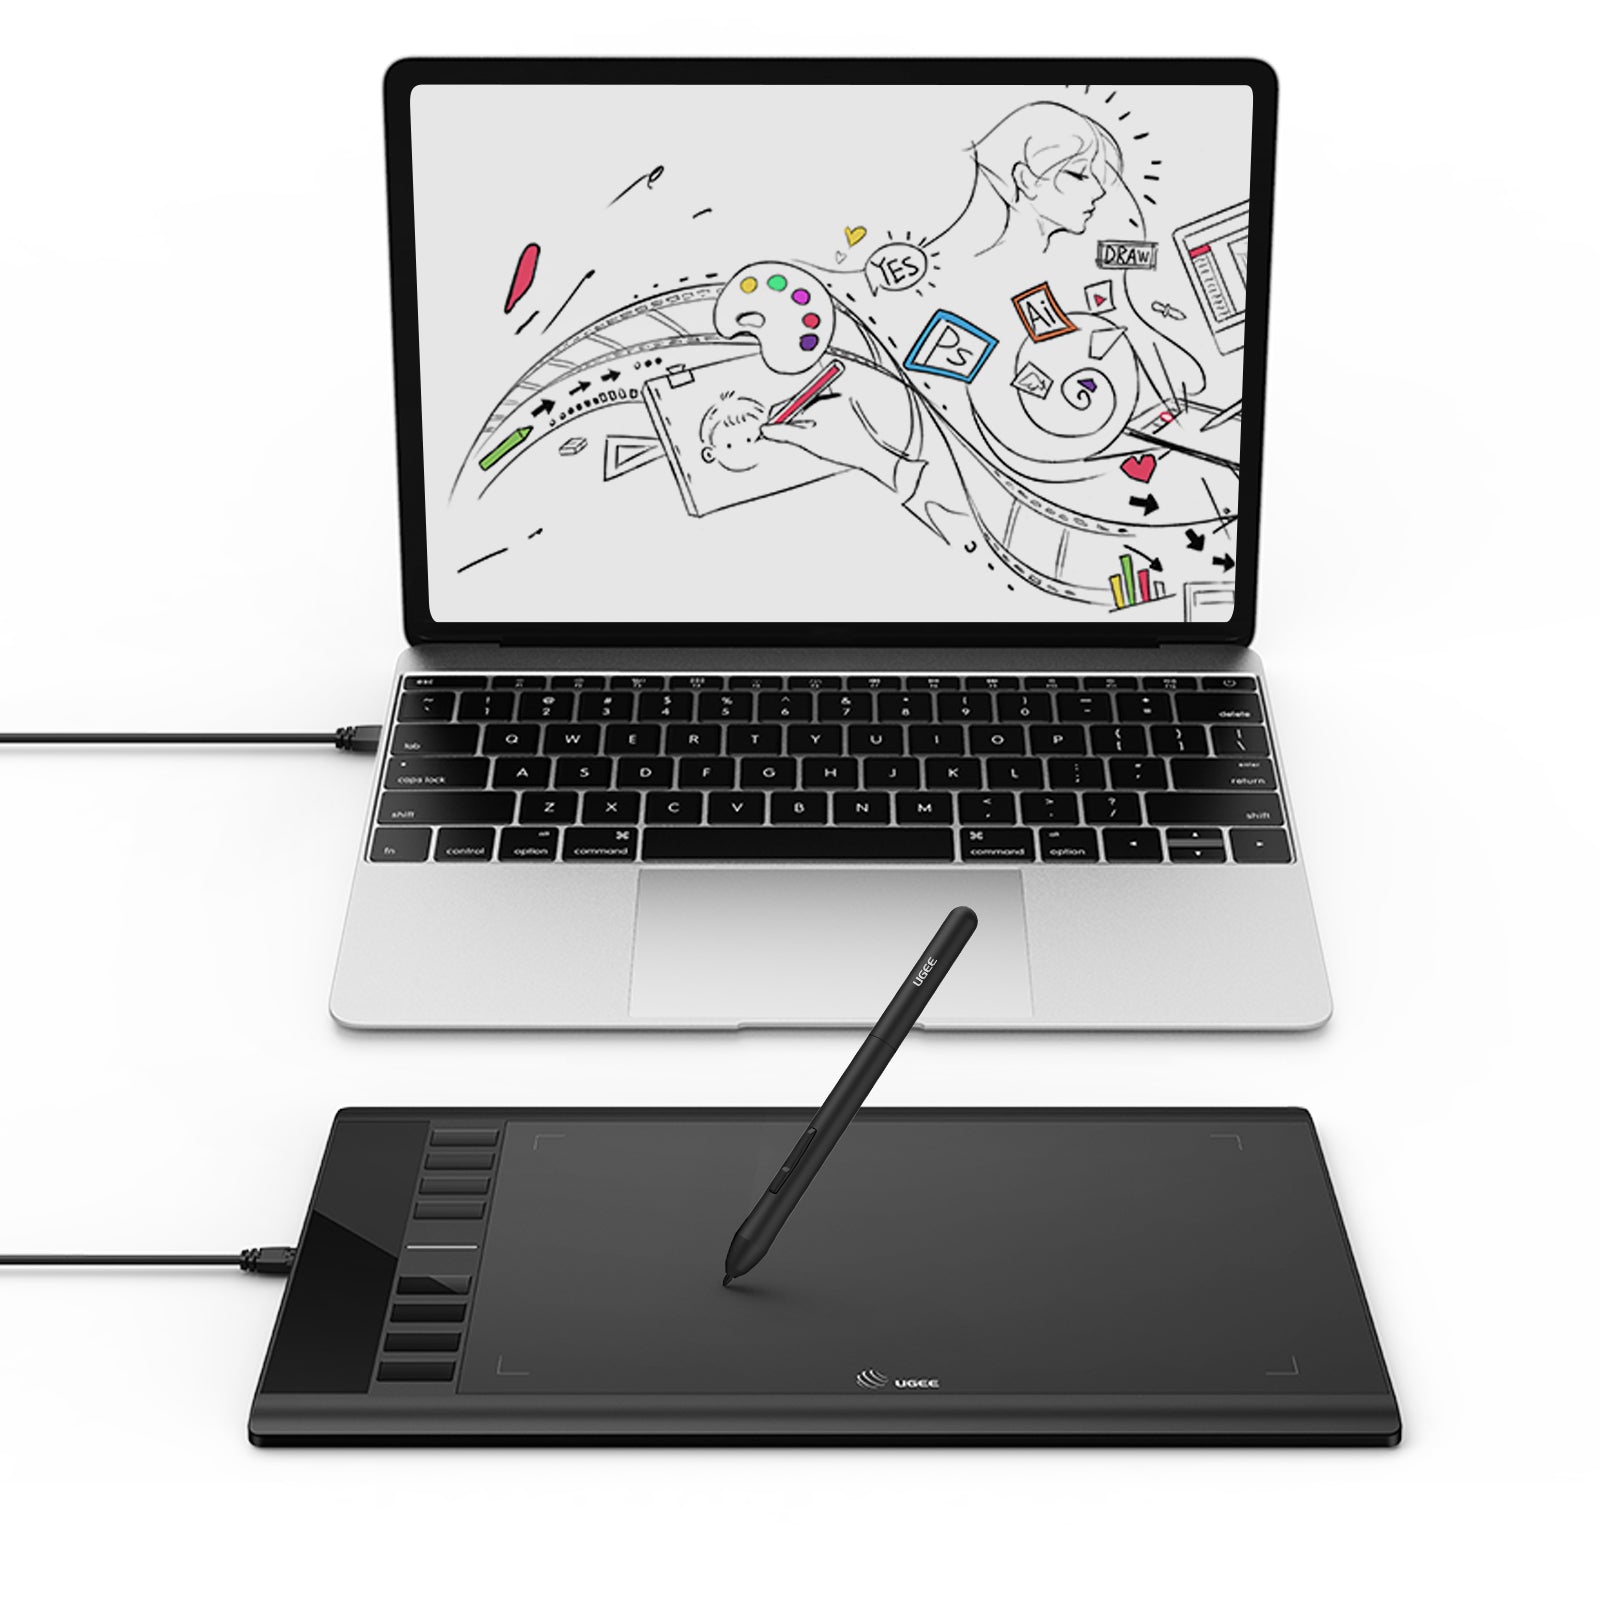 A4 Digital Drawing Tablet Offer - Wowcher